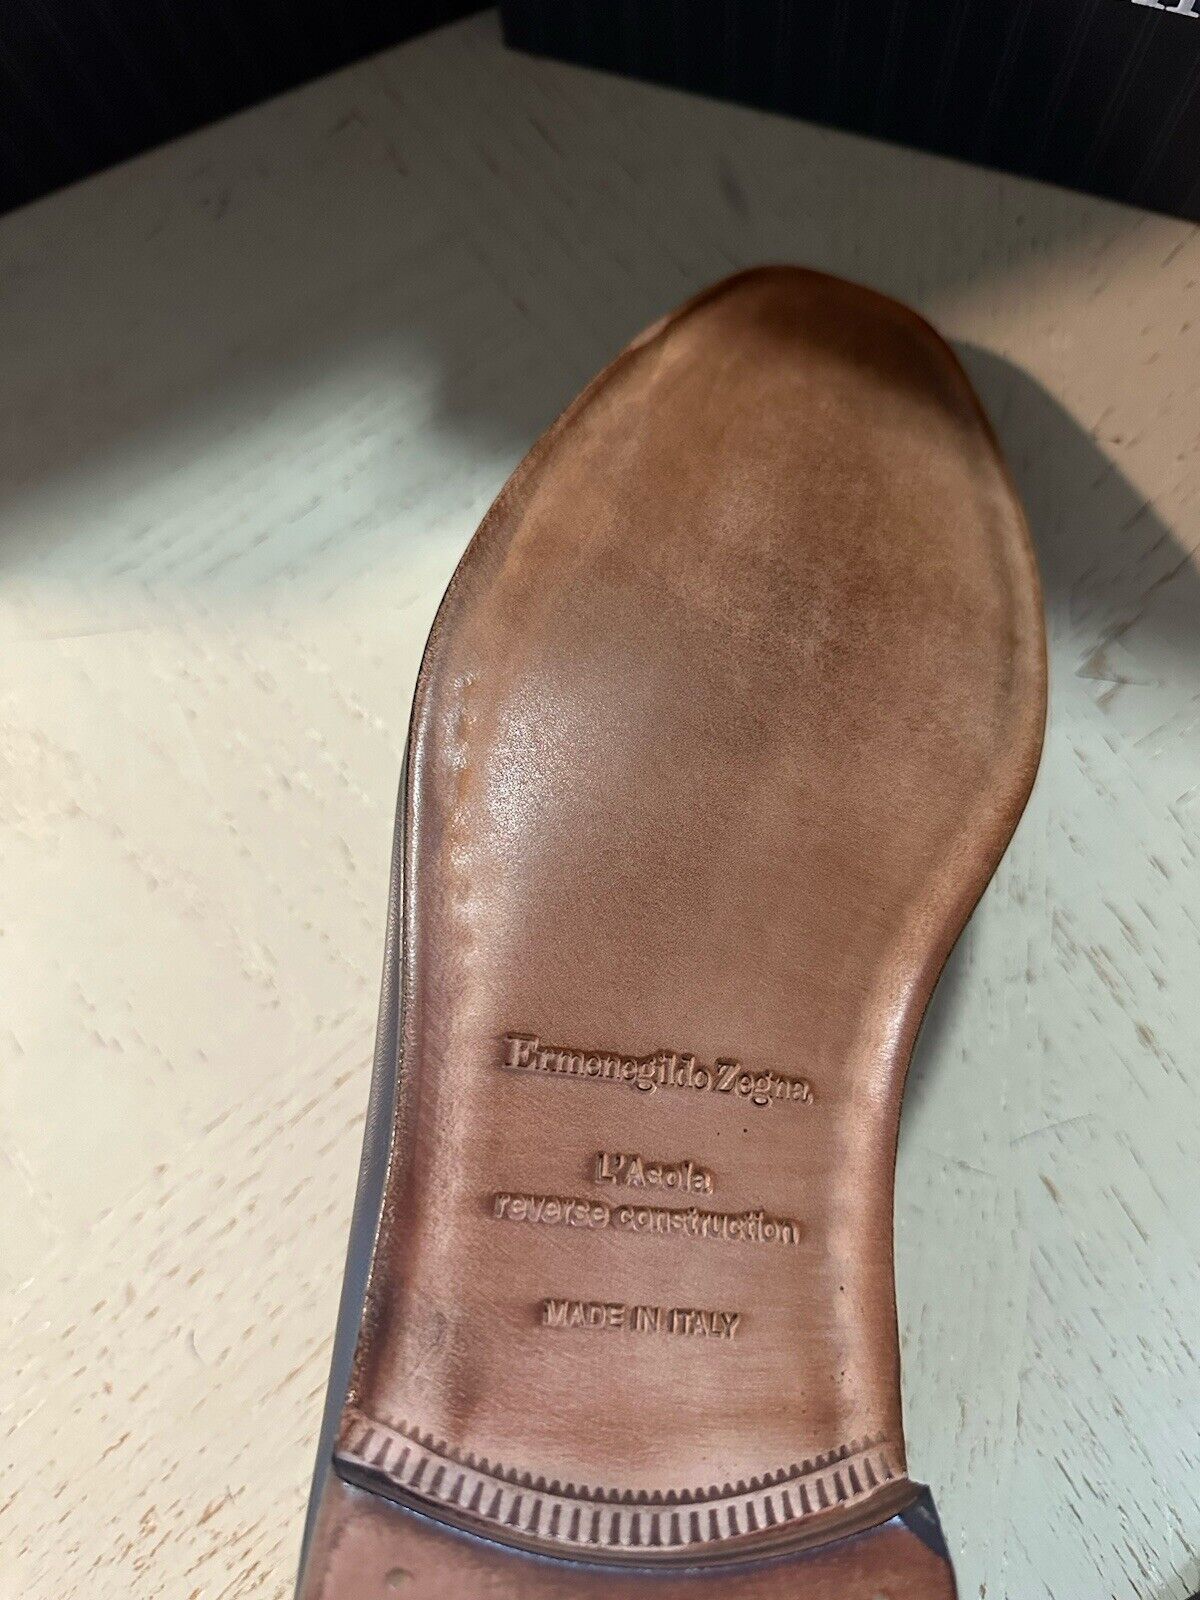 Ermenegildo Zegna Leather Reverse Construction Loafers DK Blue 10 US New $950